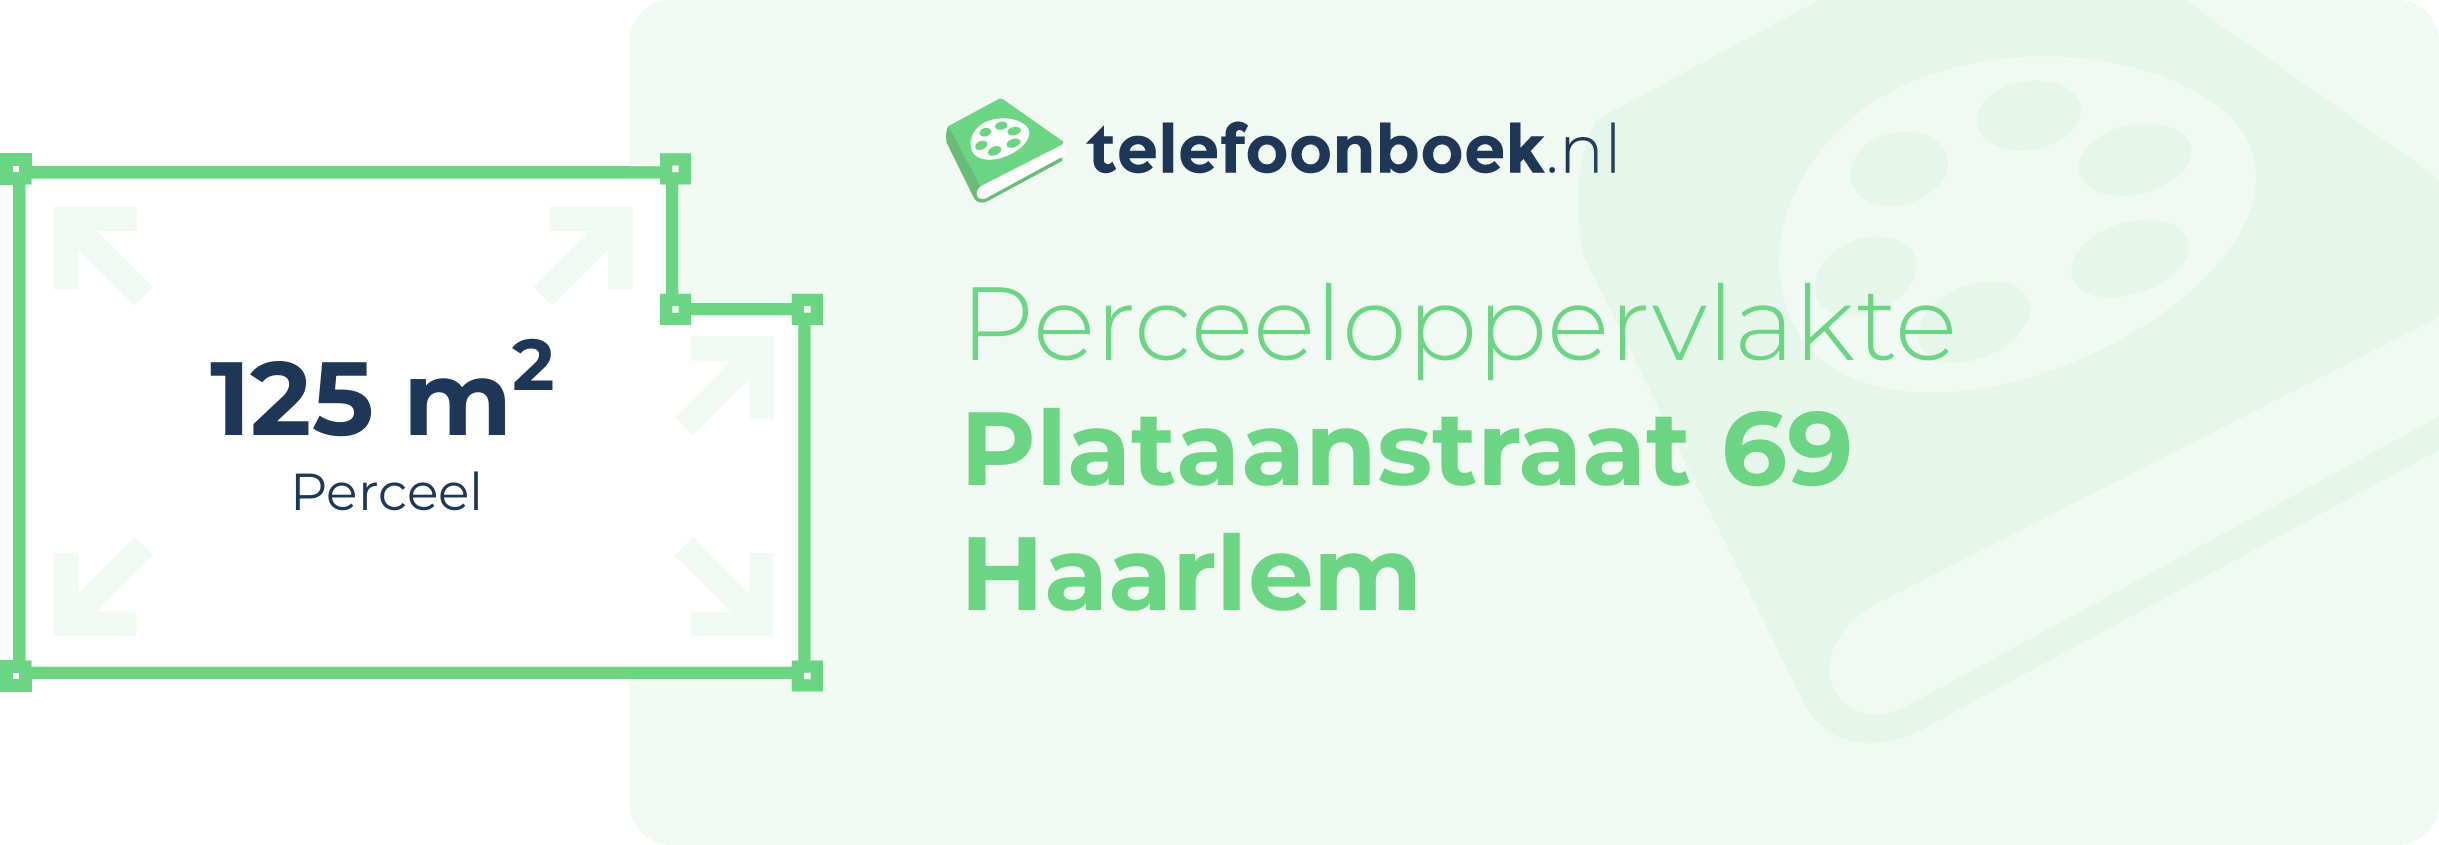 Perceeloppervlakte Plataanstraat 69 Haarlem